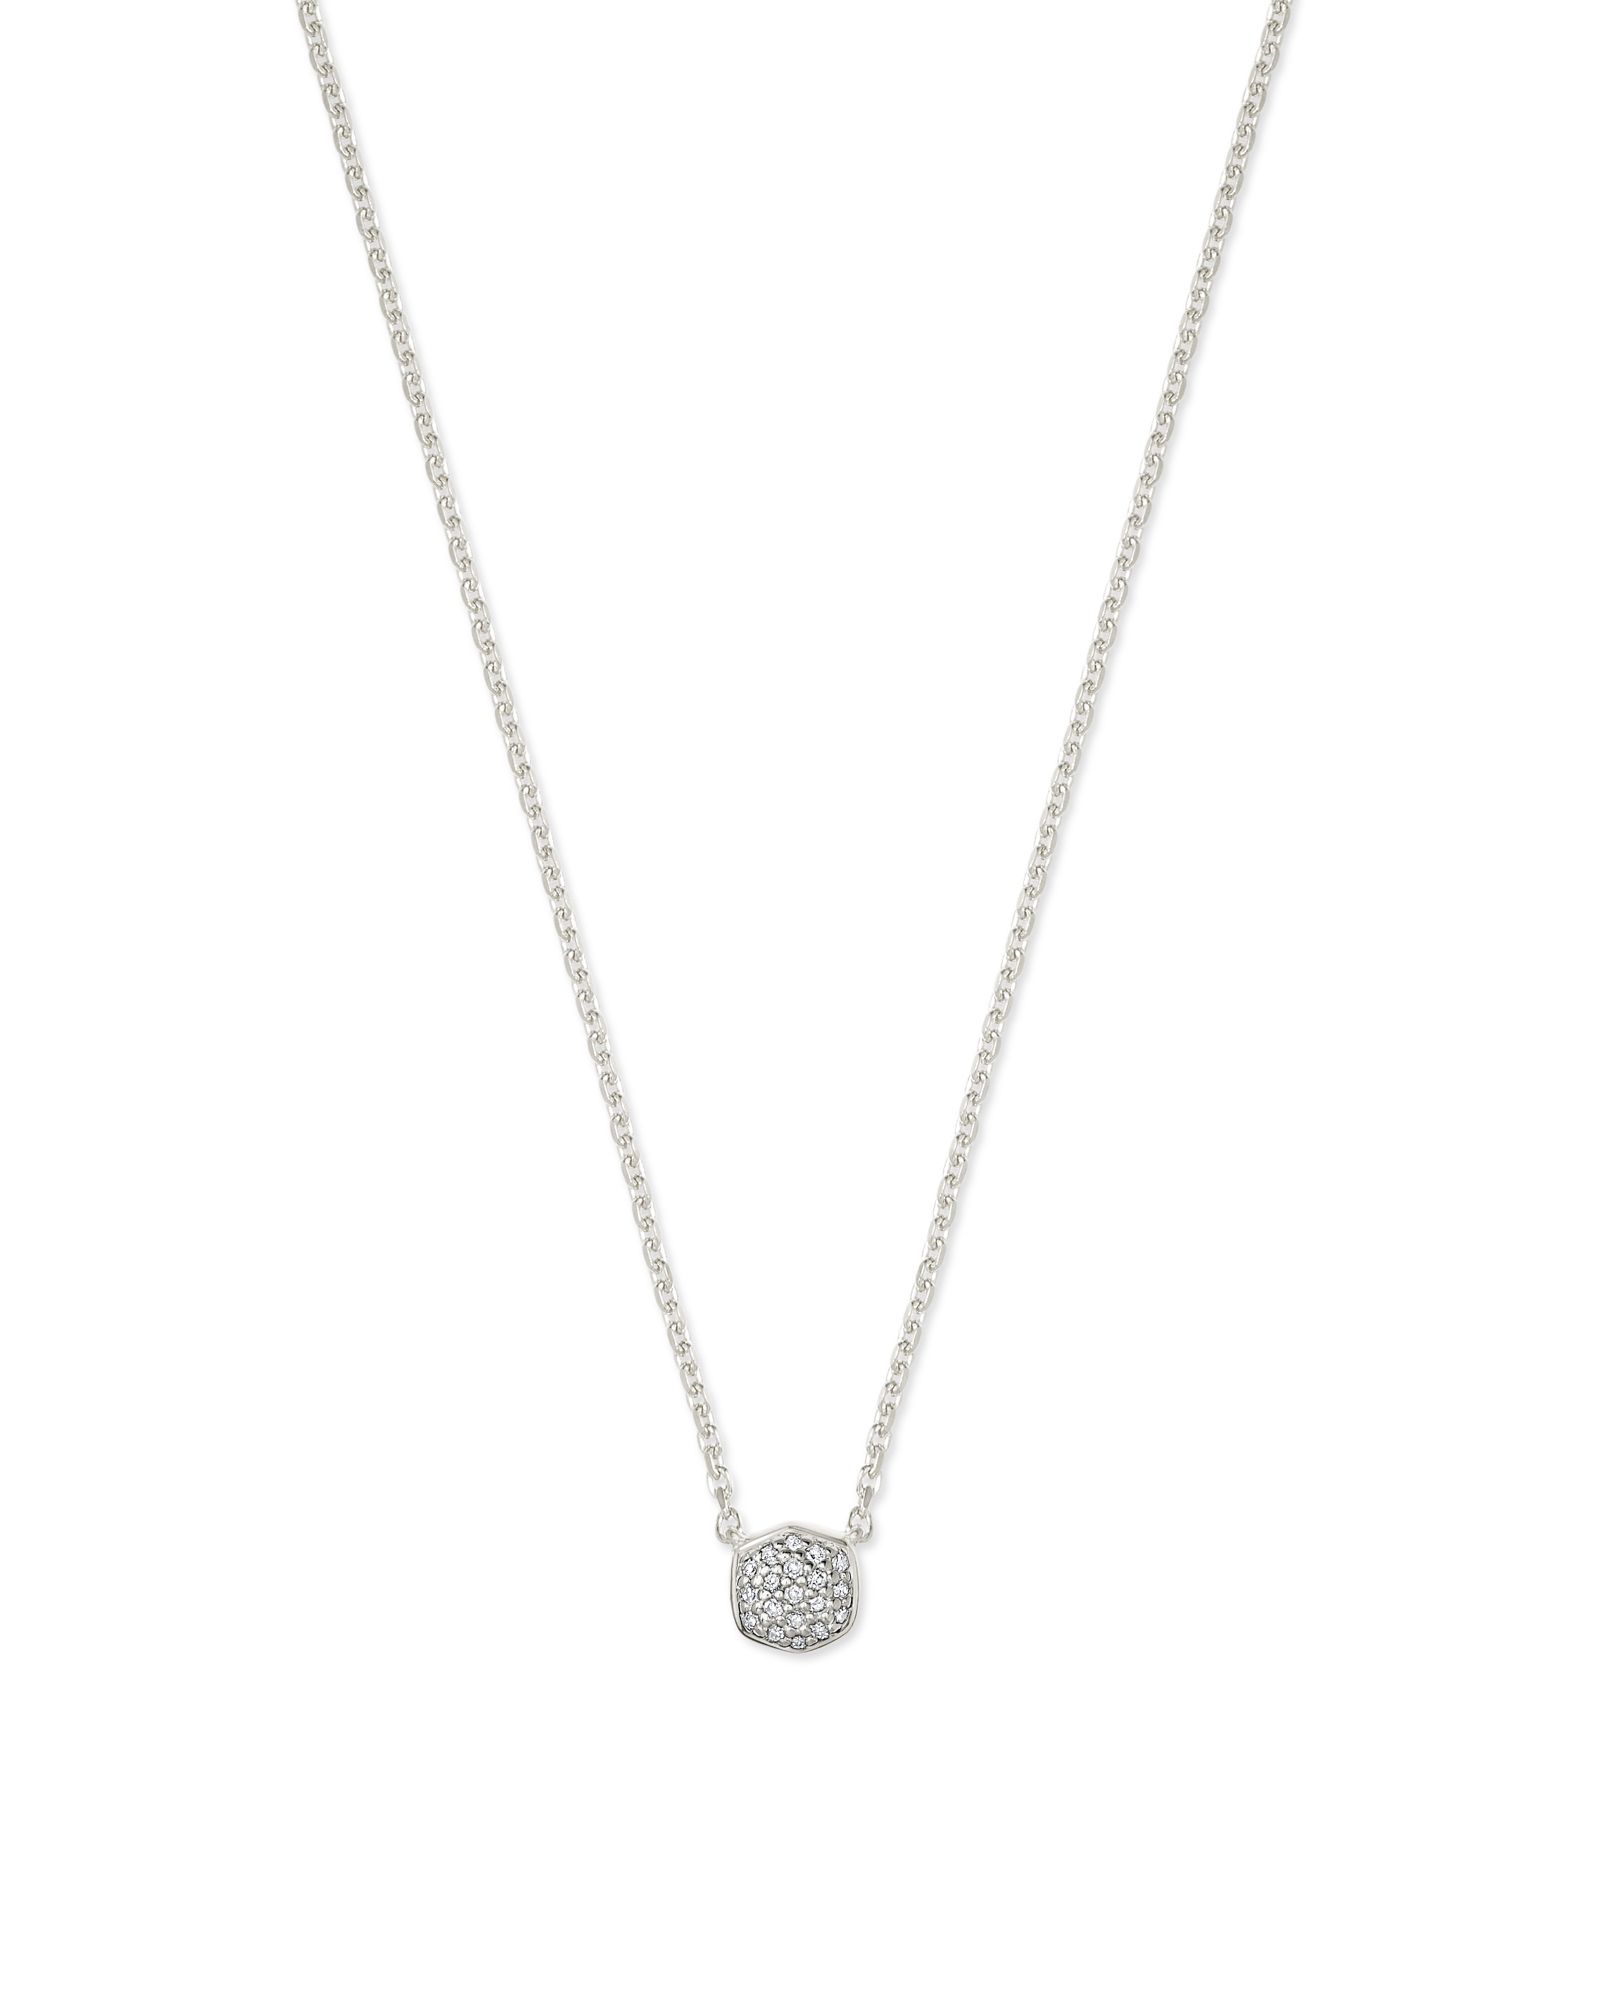 Davie Sterling Silver Pave Pendant Necklace in White Diamond | Kendra Scott | Kendra Scott